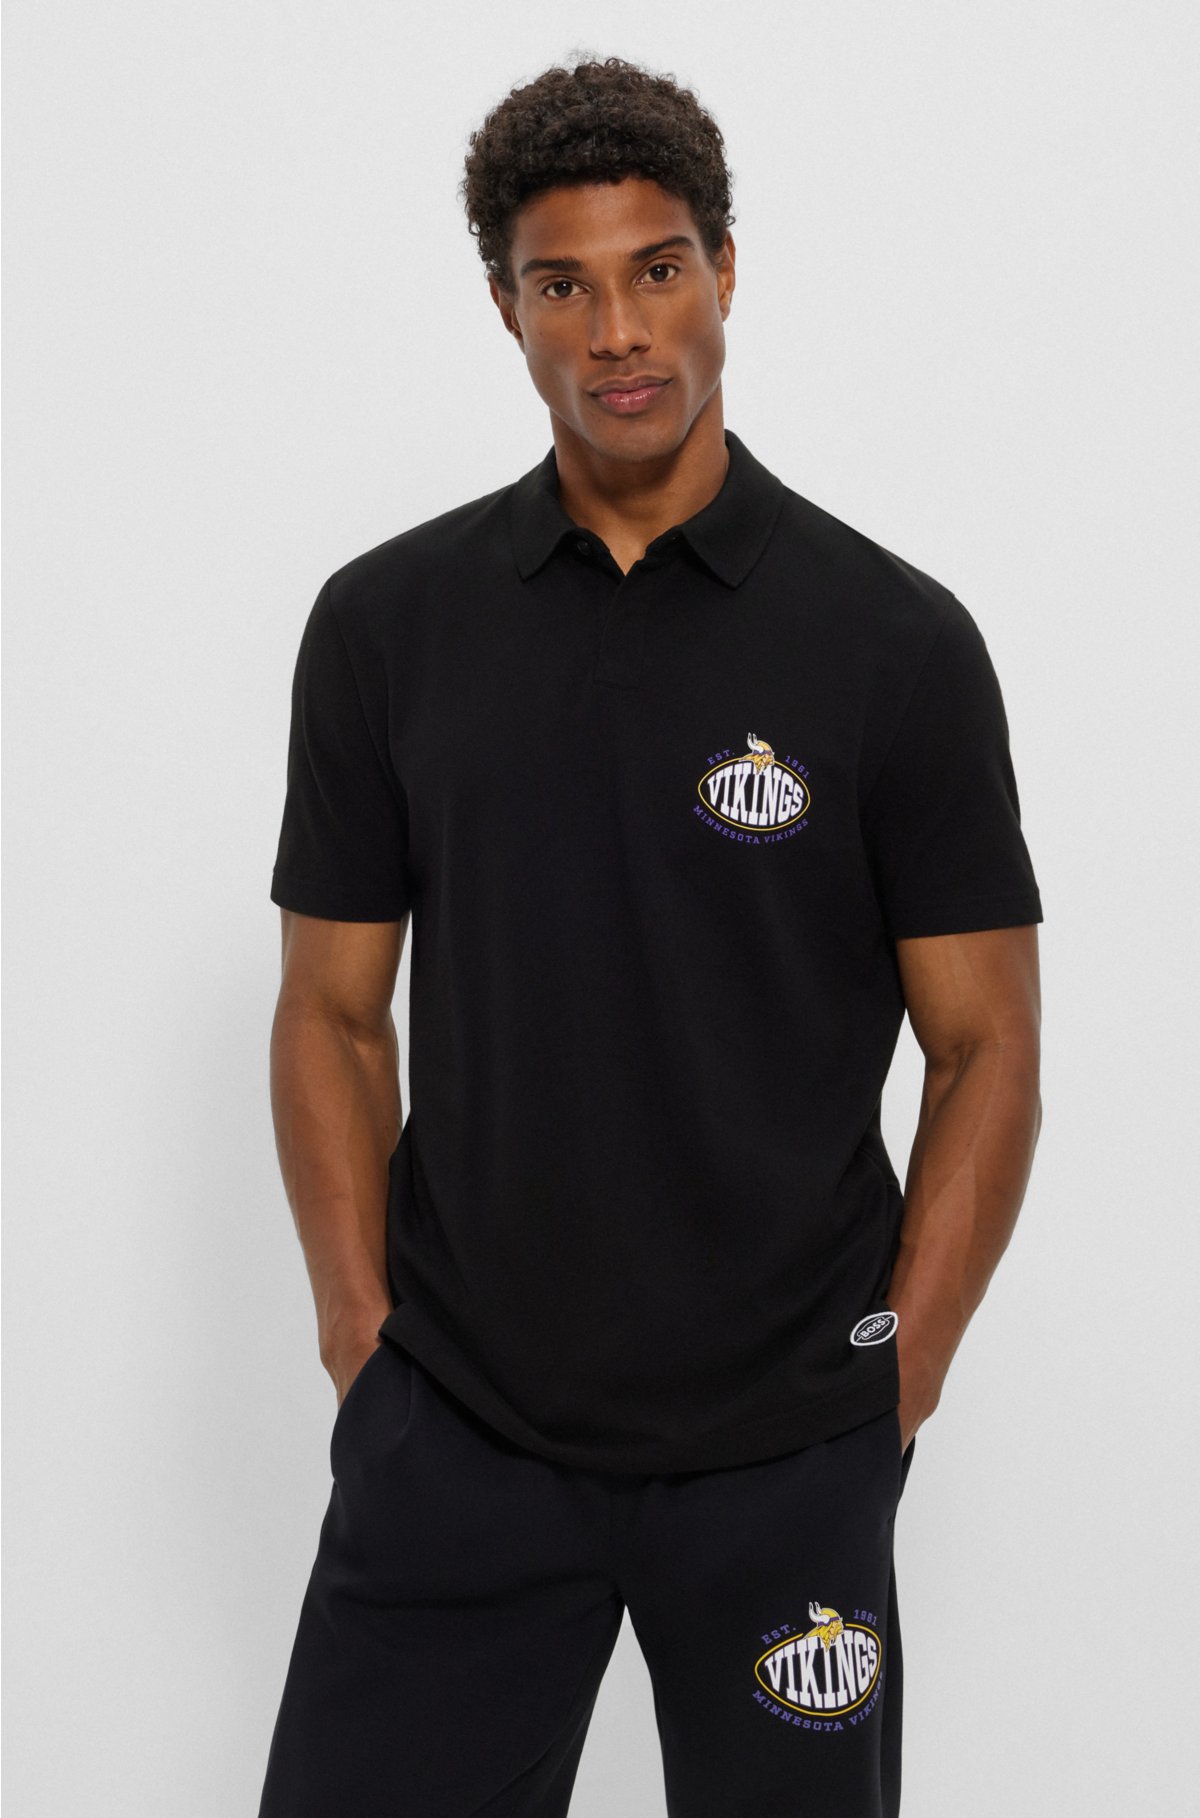 BOSS x NFL cotton-piqué polo shirt with collaborative branding, Vikings